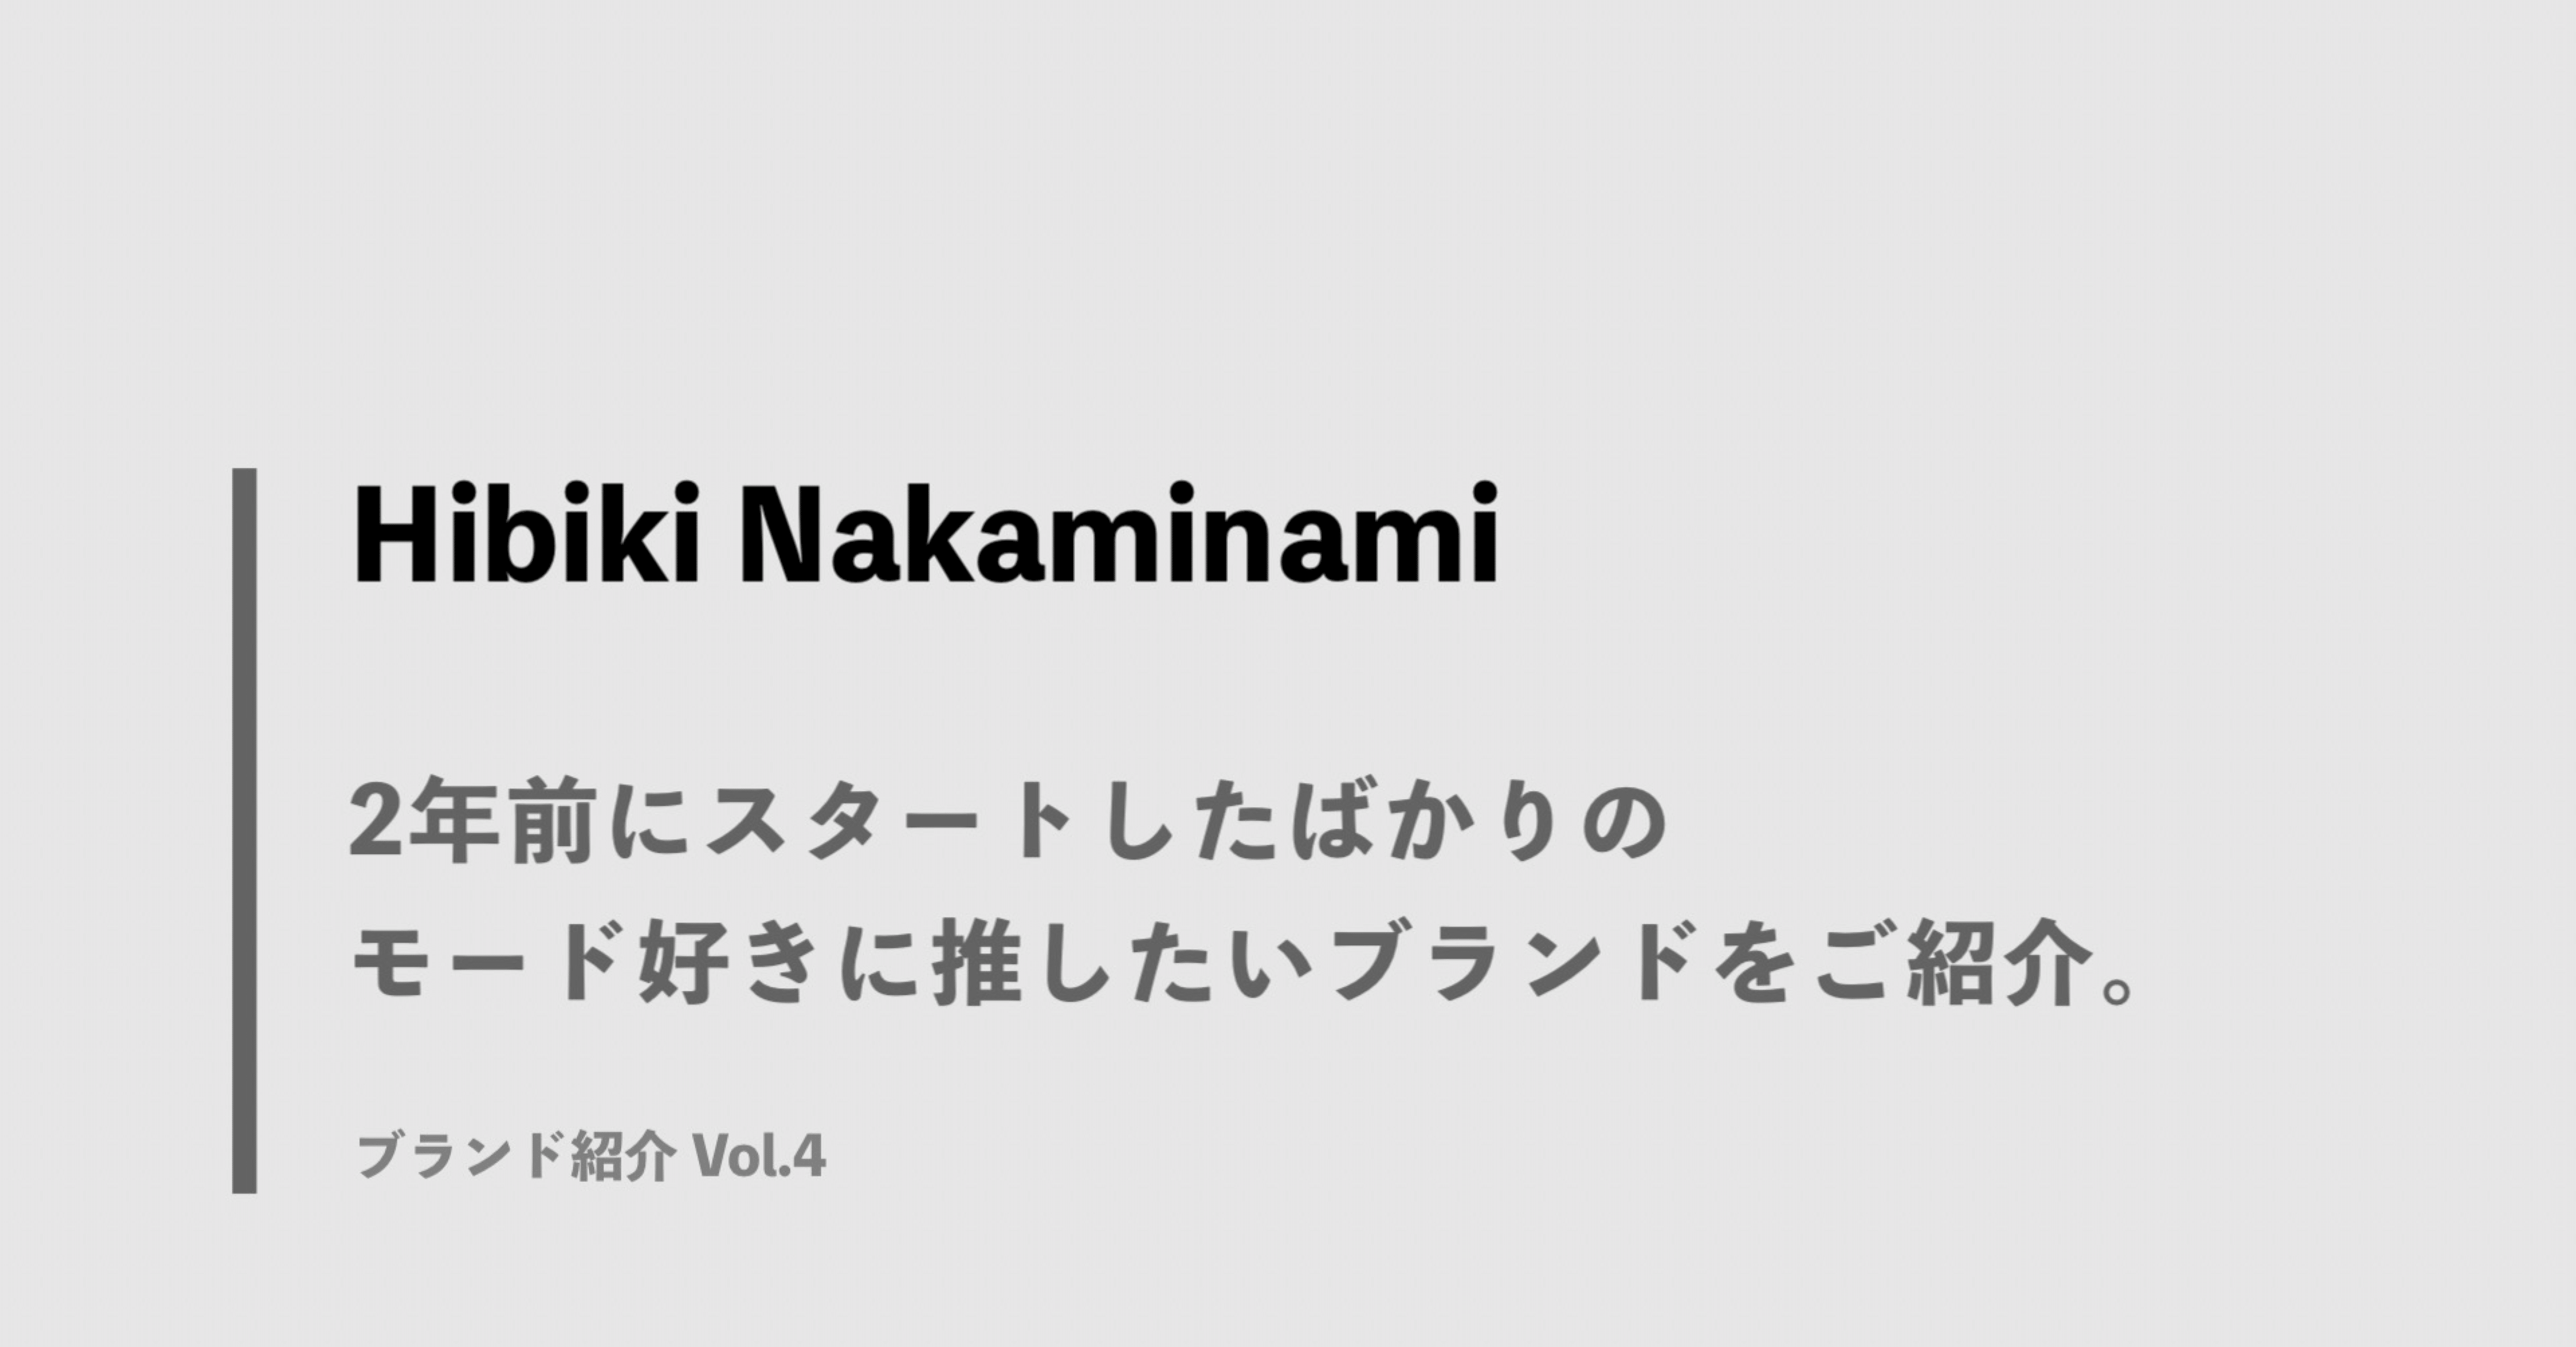 Hibiki Nakaminami 】2年前にスタートしたばかりのモード好きに推